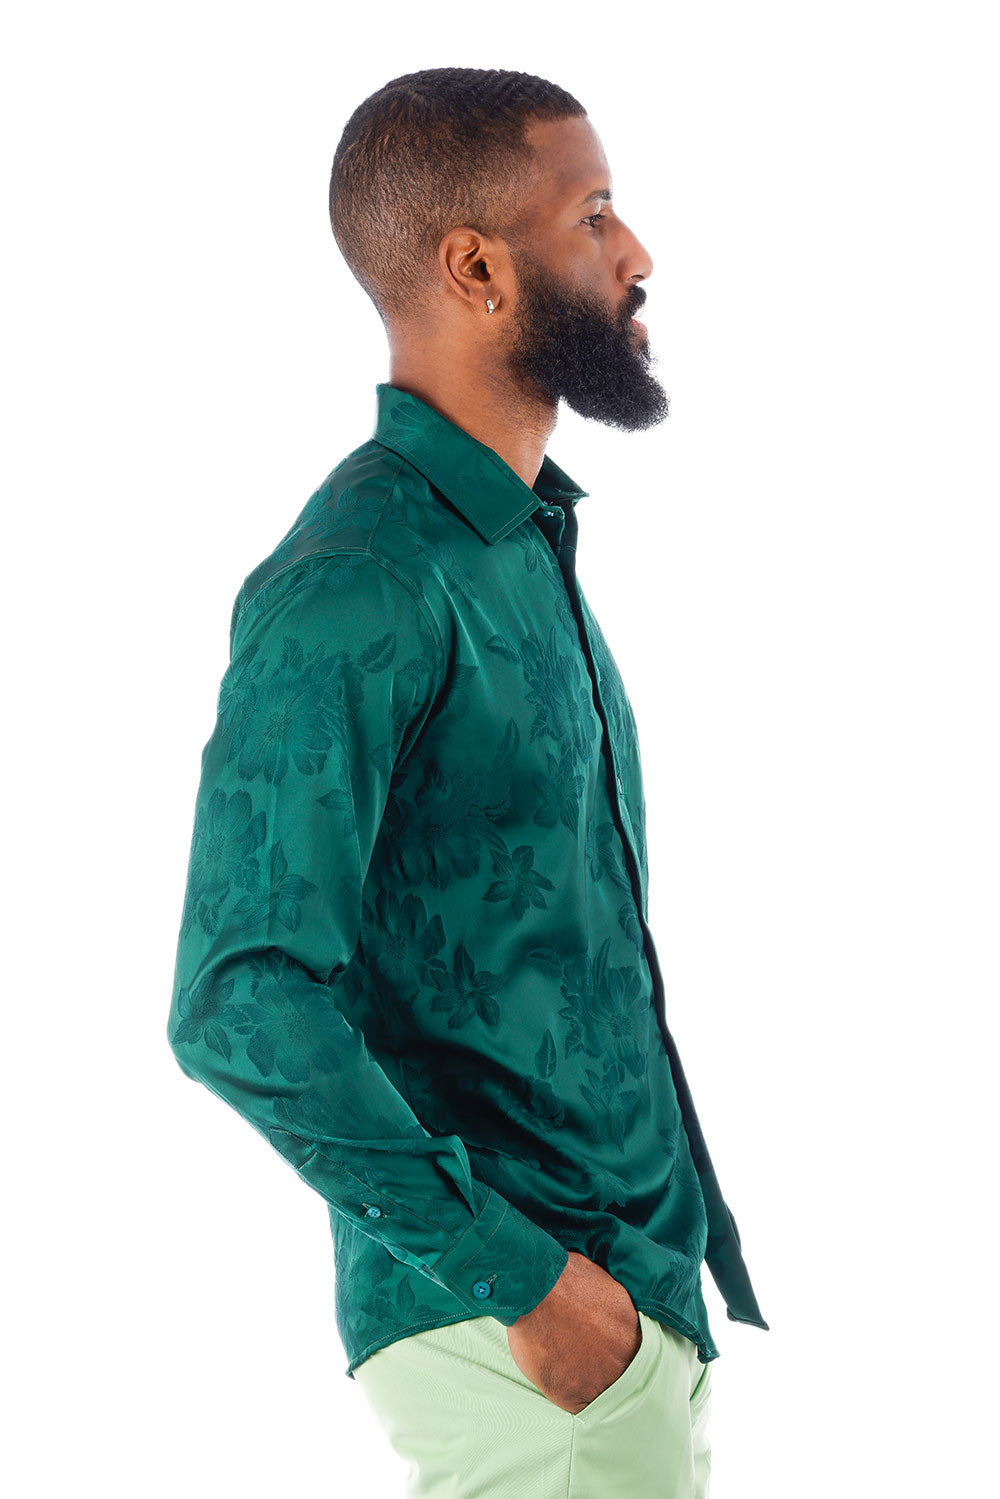 BARABAS Men's Floral Stretch Button Down Long Sleeve Shirt 4B36 Green